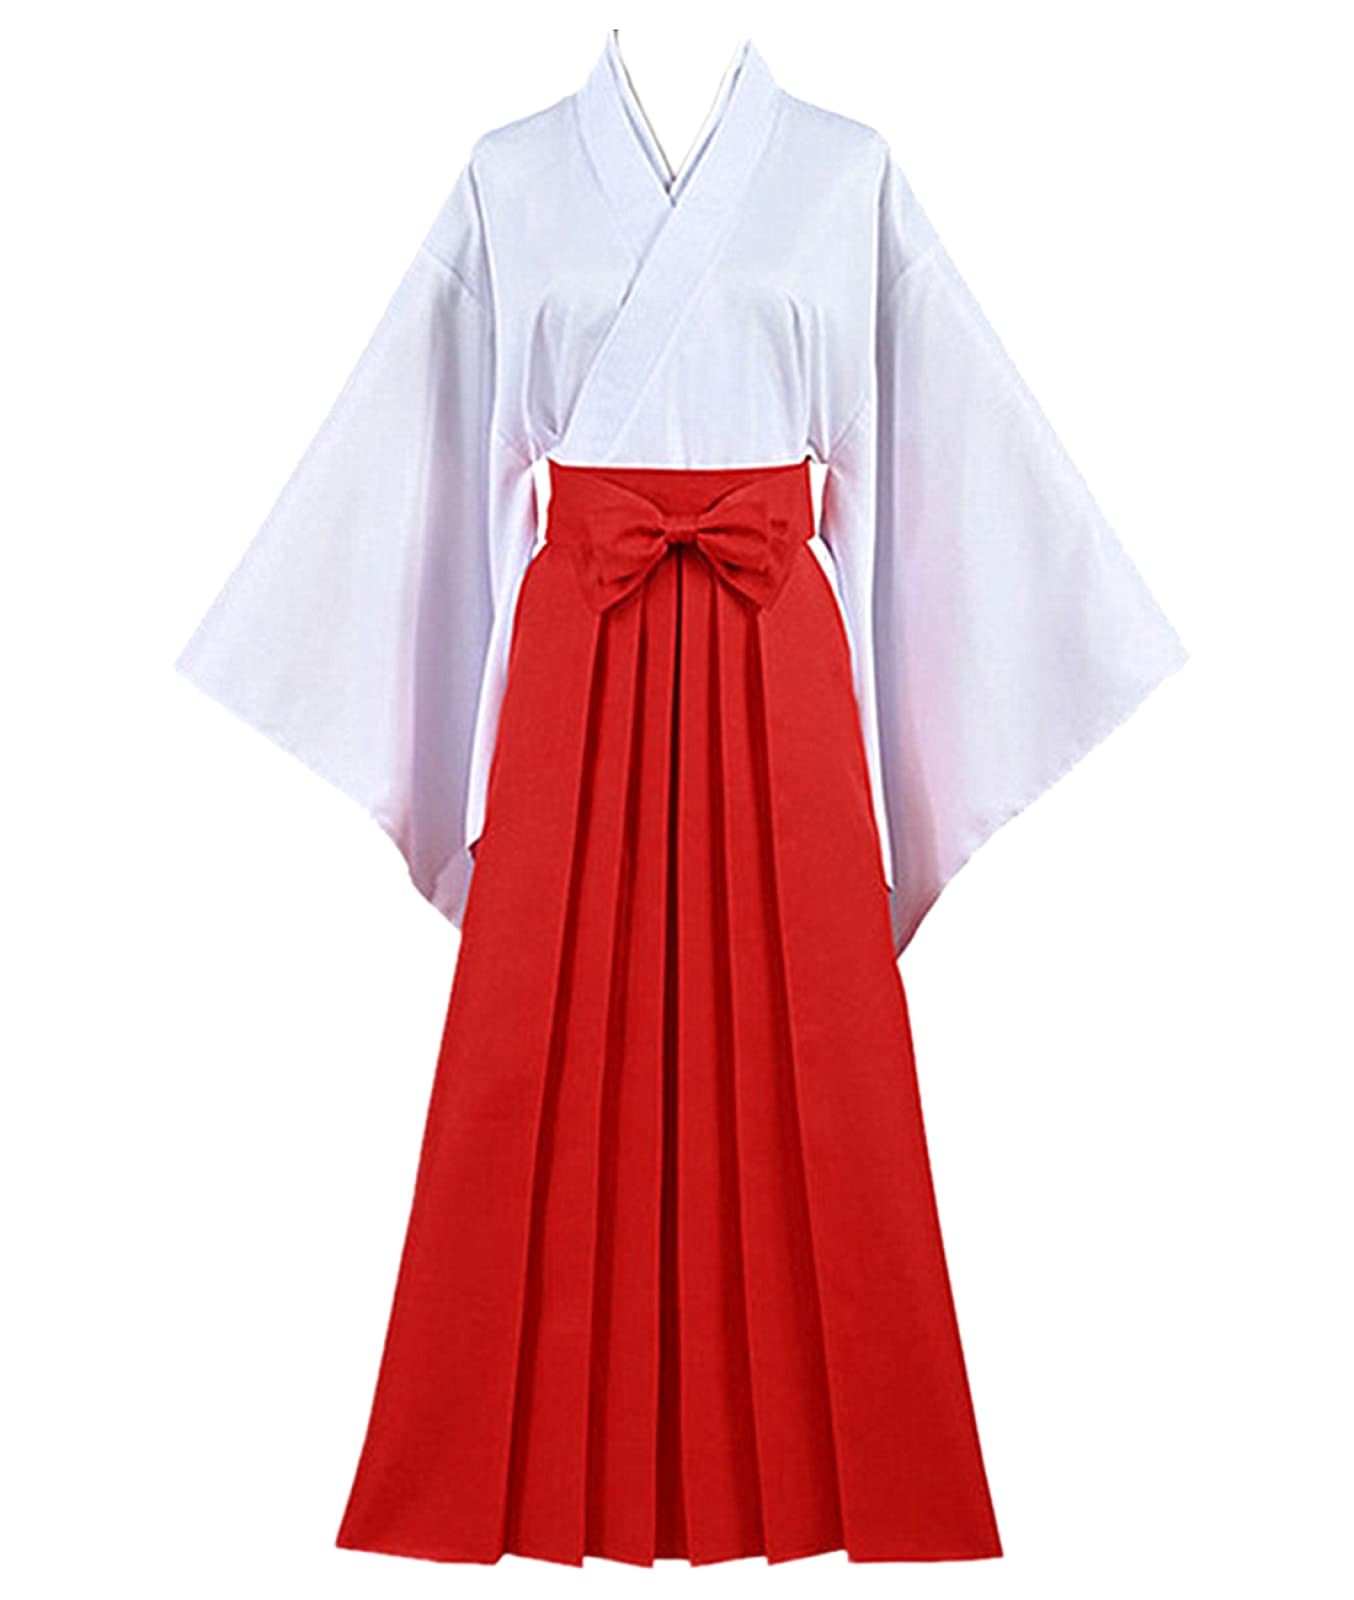 Jujutsu Kaisen Cosplay Iori Utahime Outfits, Damen Kimono Kleid Kostüm Anzug für Anime Fans Cosplay, Rot, XXL